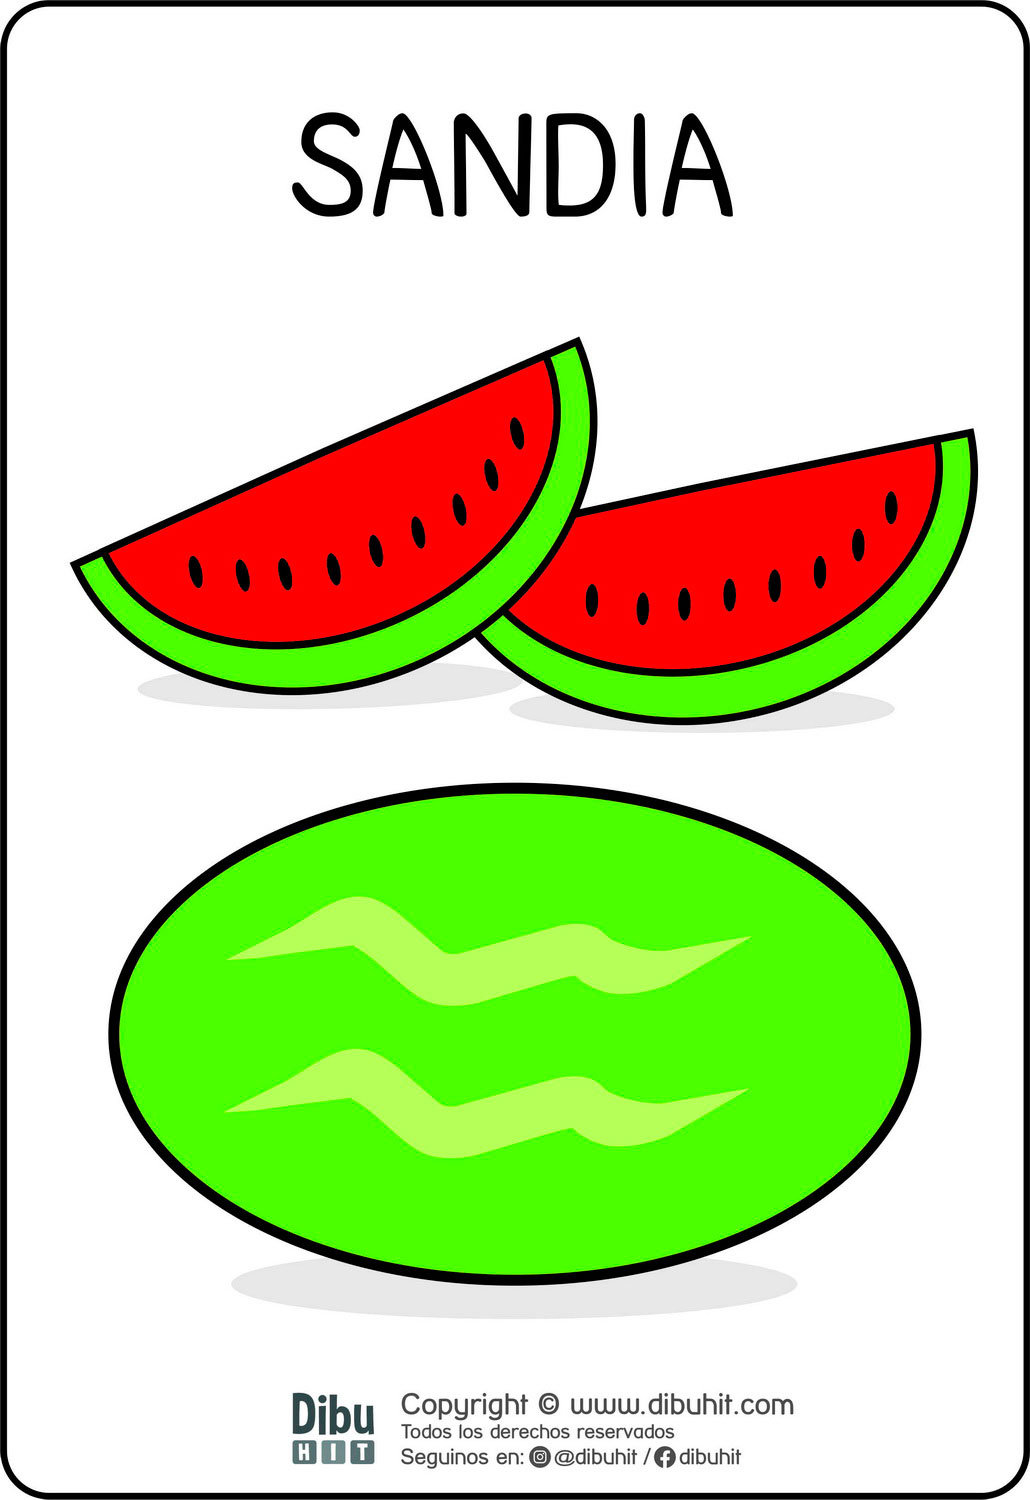 Lamina didactica sandia watermelon